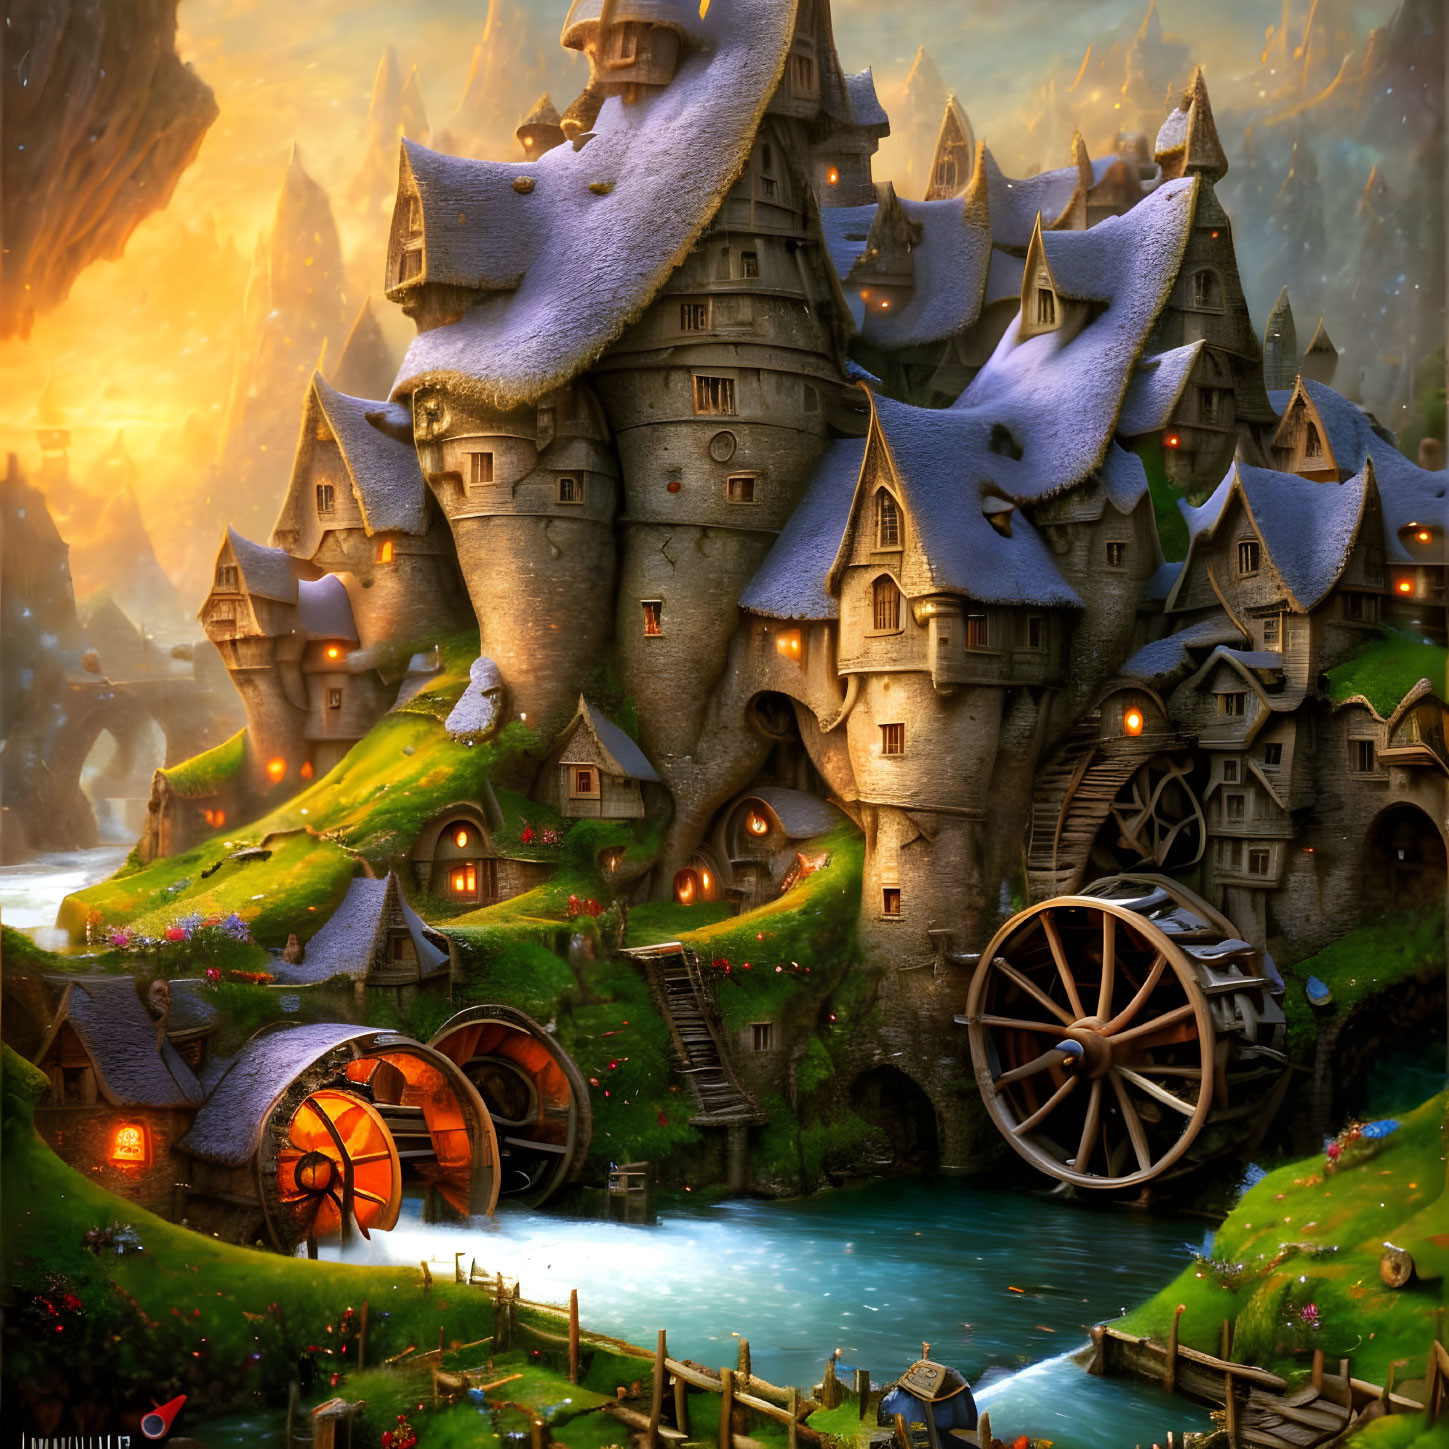 Fairytale Watermill